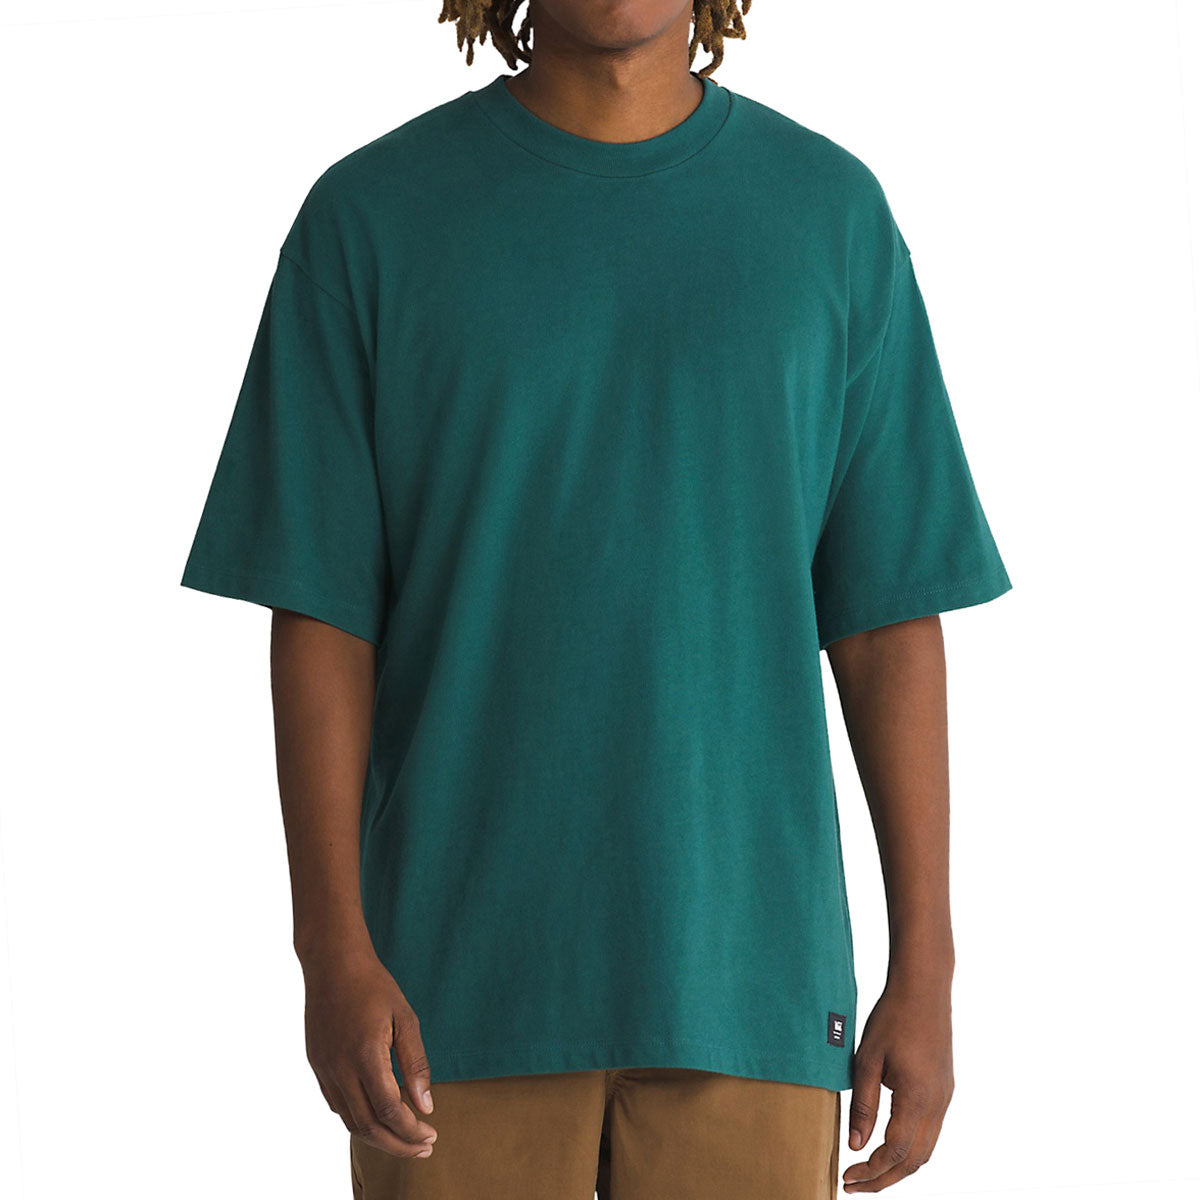 Vans Original Standards T-Shirt - Bistro Green image 2